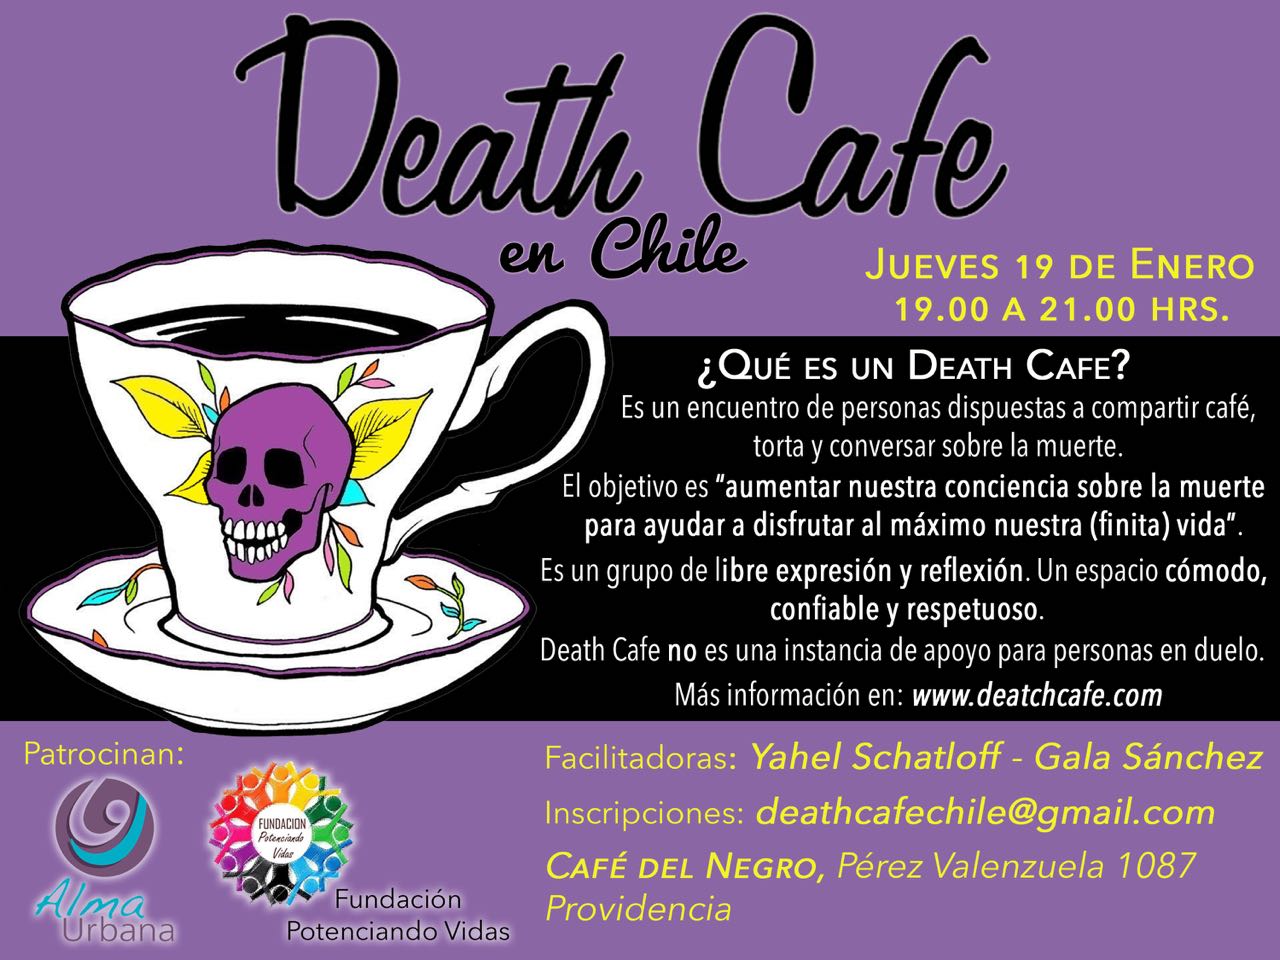 Death Cafe in Santiago, Chile